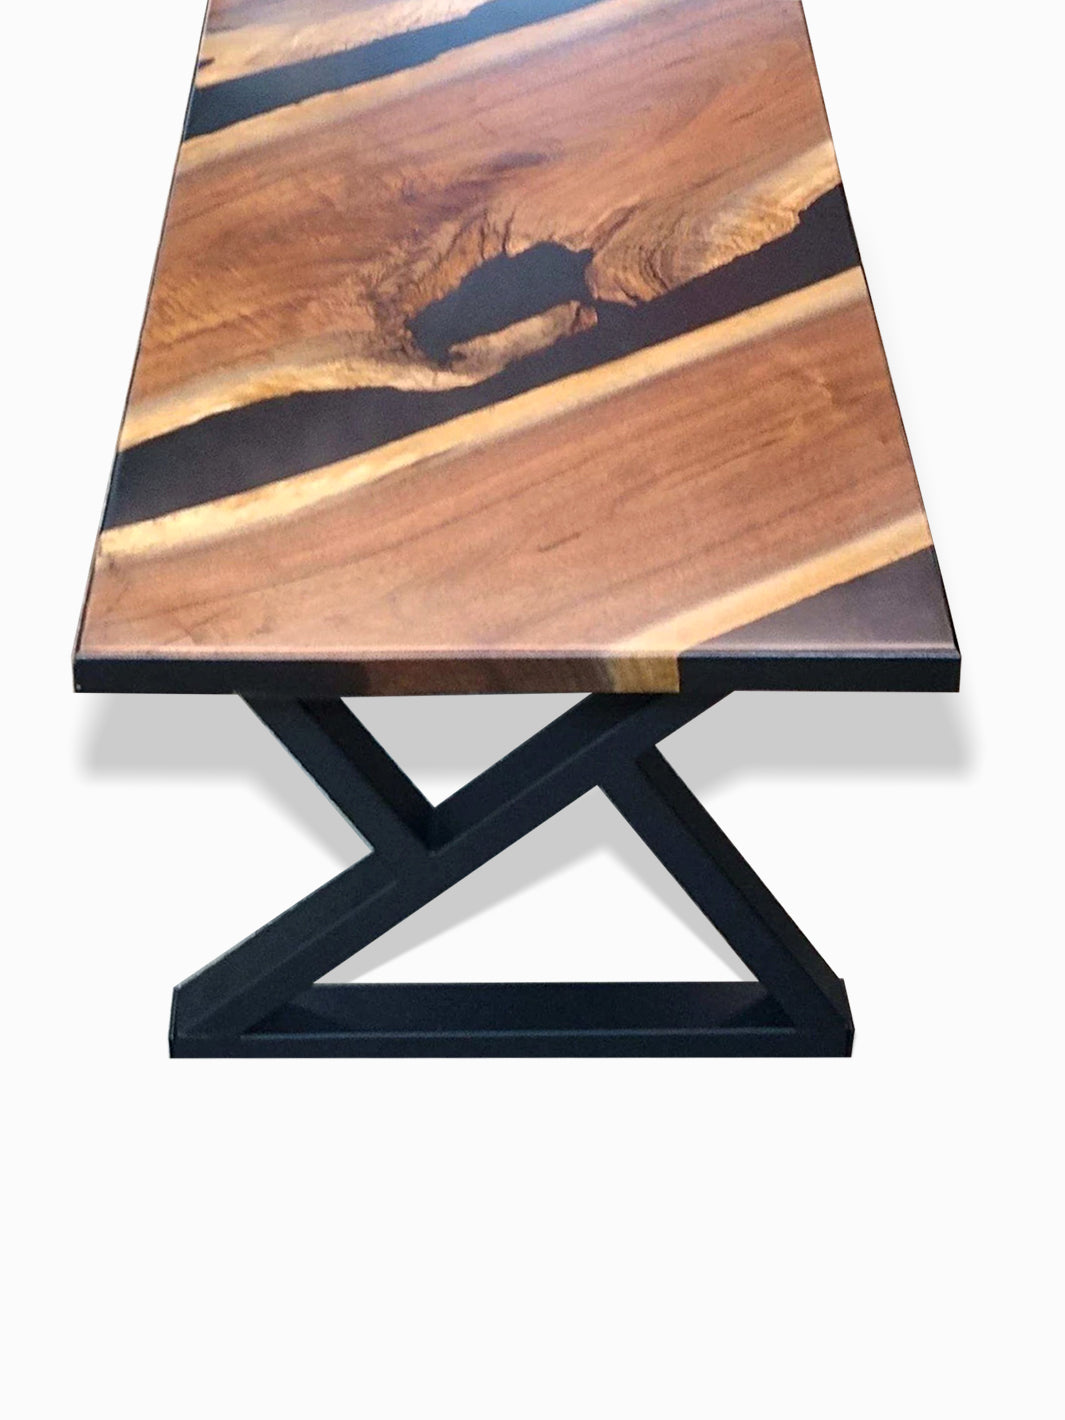 Handmade Black Walnut Epoxy River Coffee Table - 48"x20"